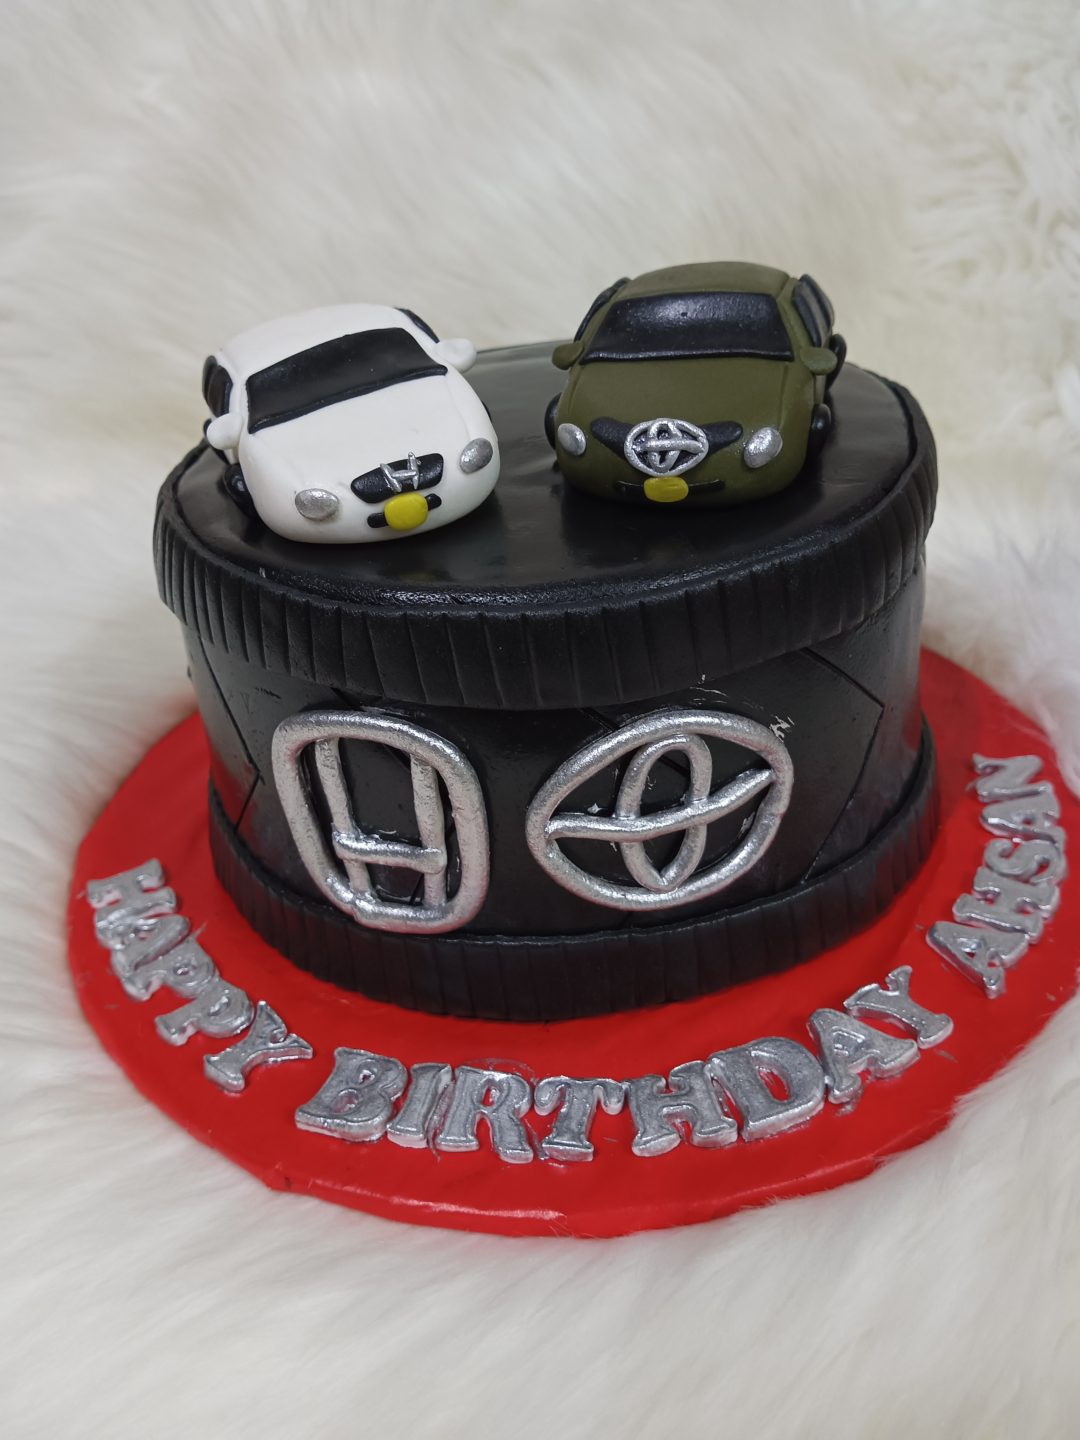 Customized car theme full fondant cake